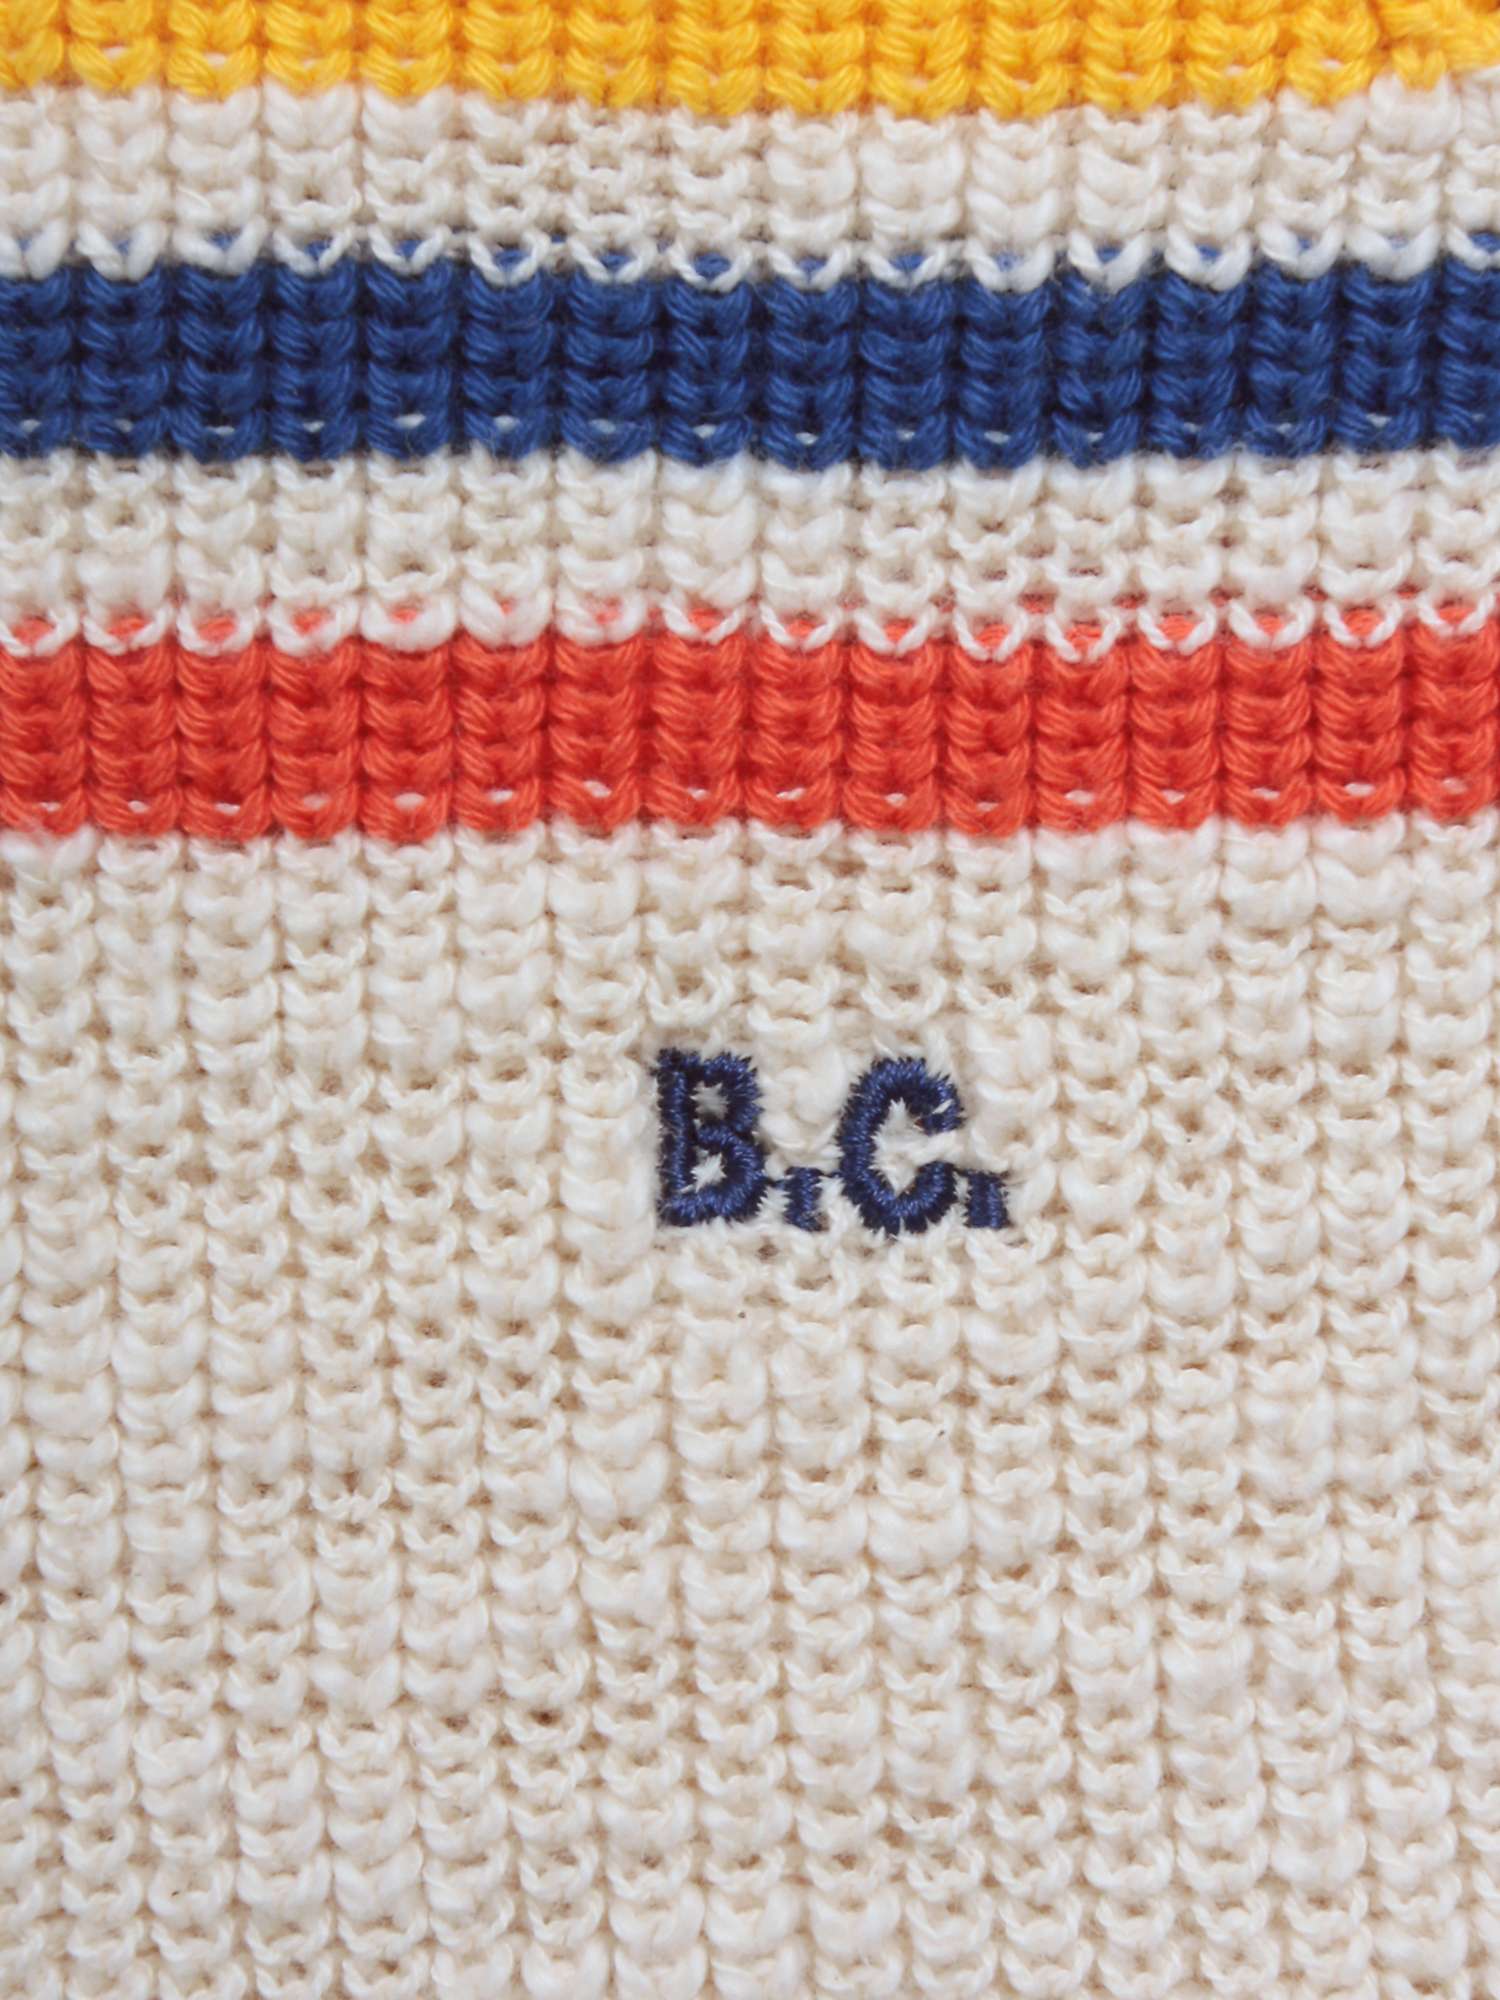 Buy Bobo Choses Kids' Organic Cotton Logo Embroidered Stripe Knit Jumper, Natural Online at johnlewis.com